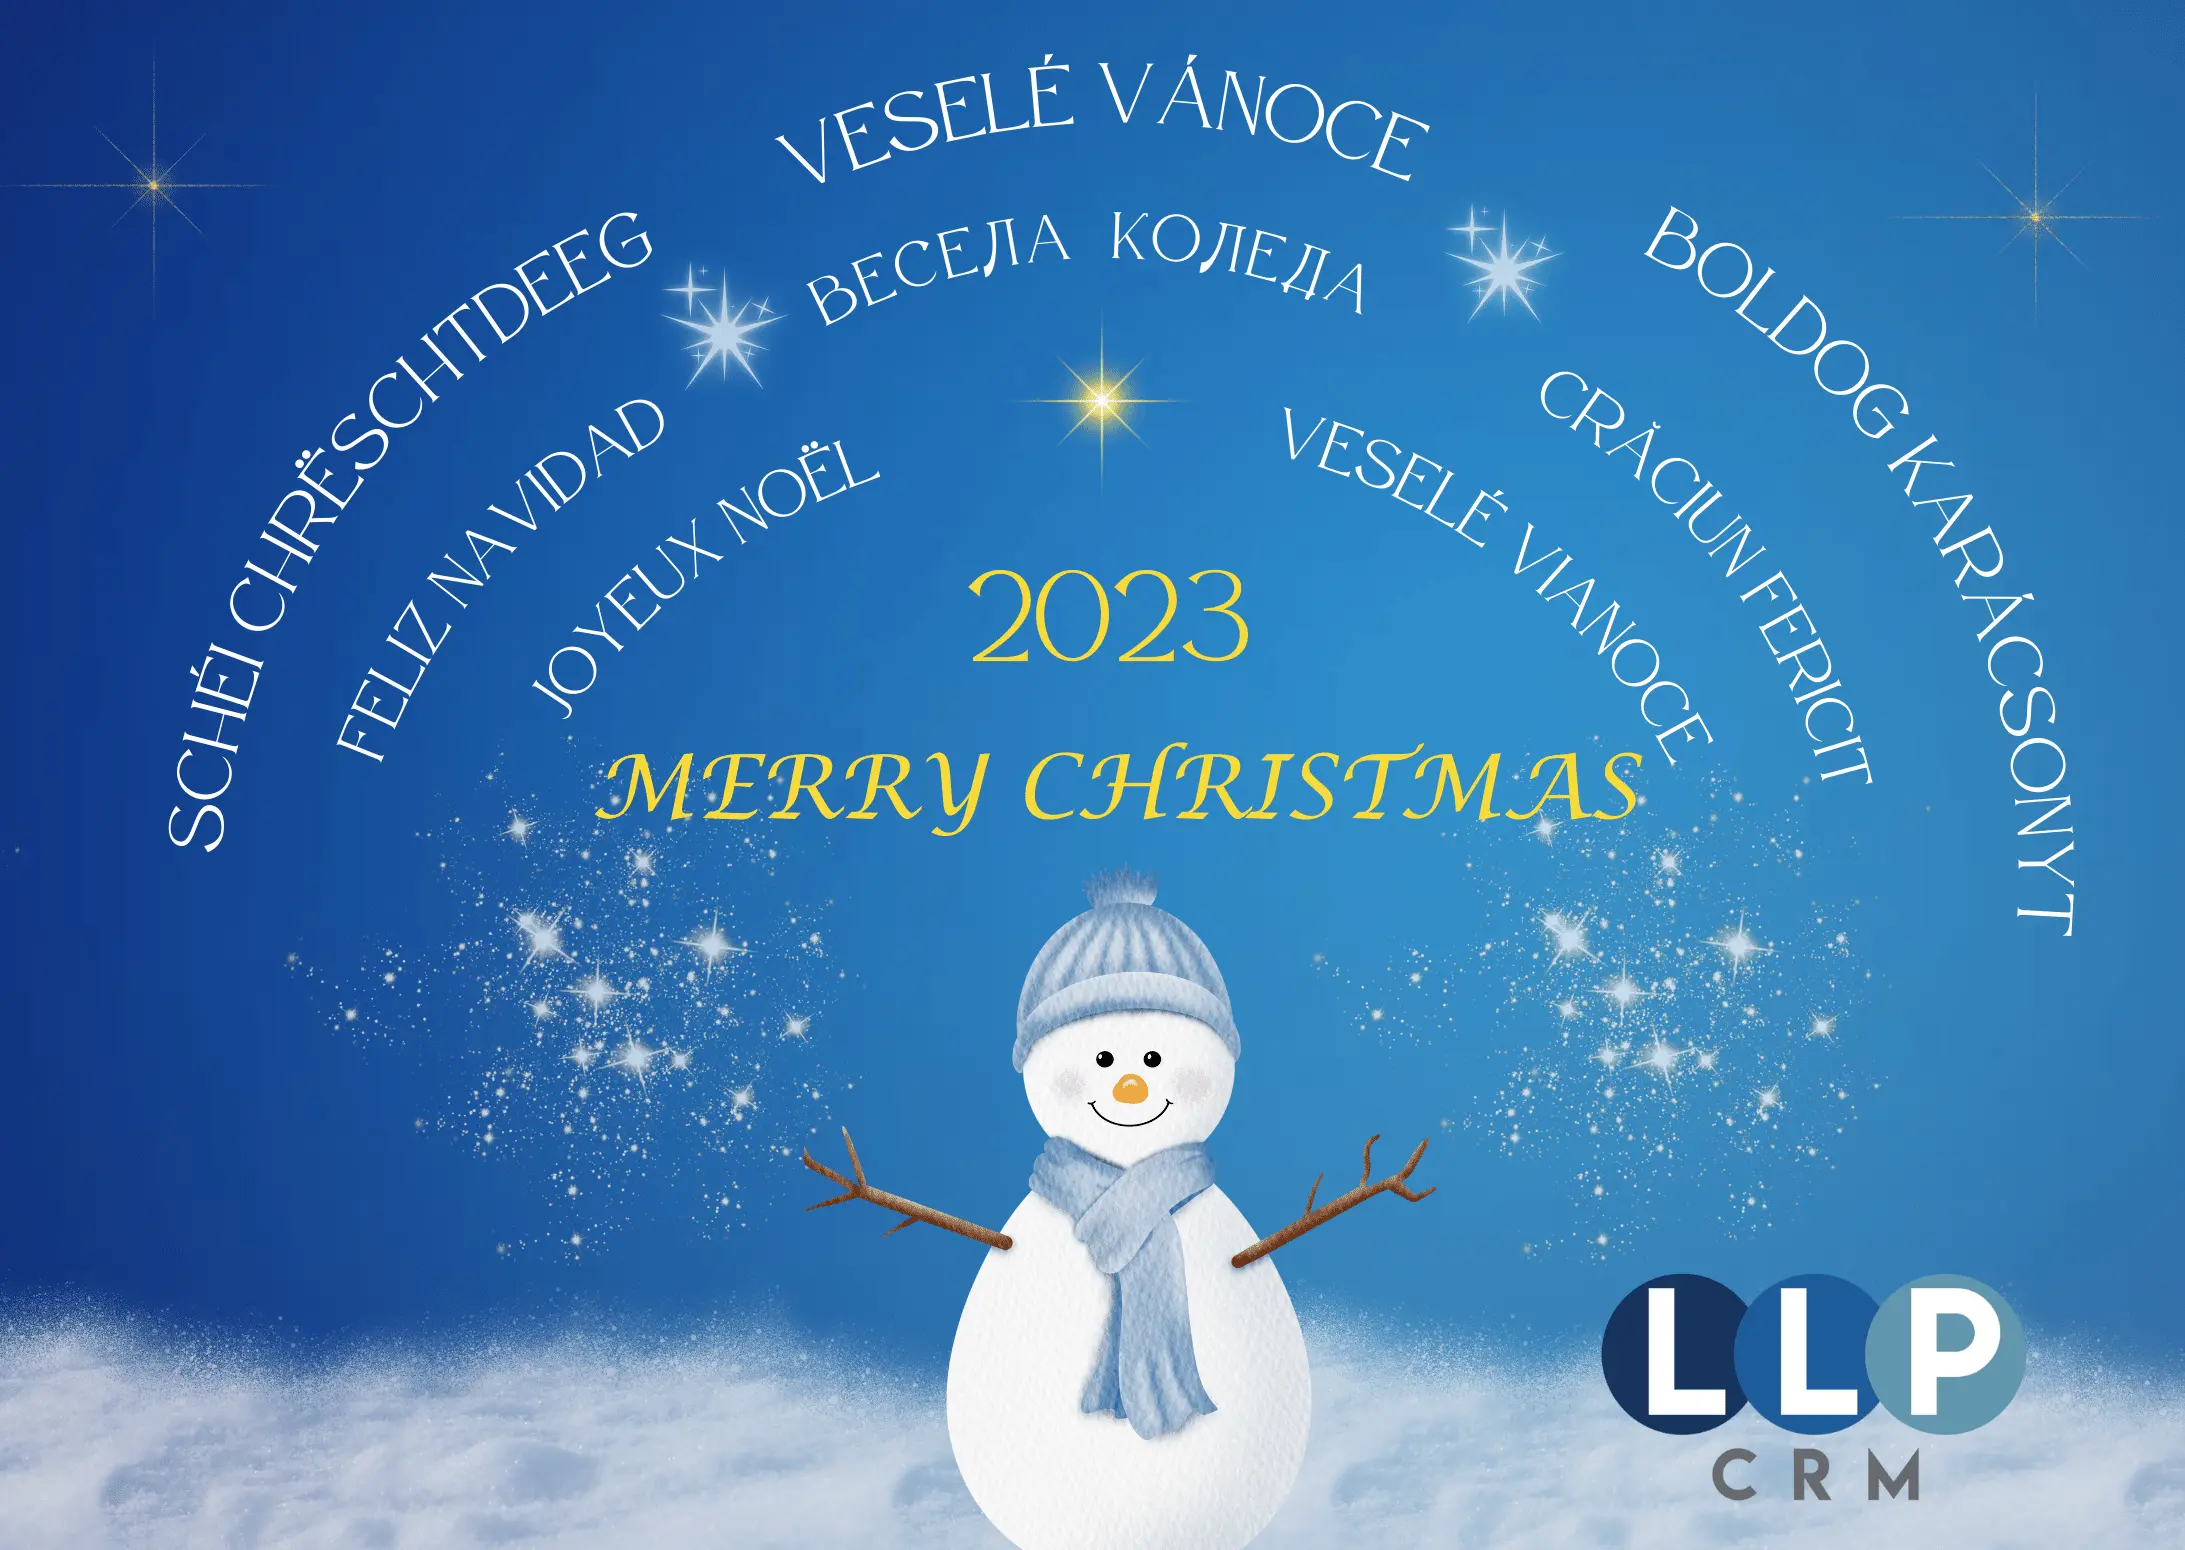 LLP CRM Christmas card 2023